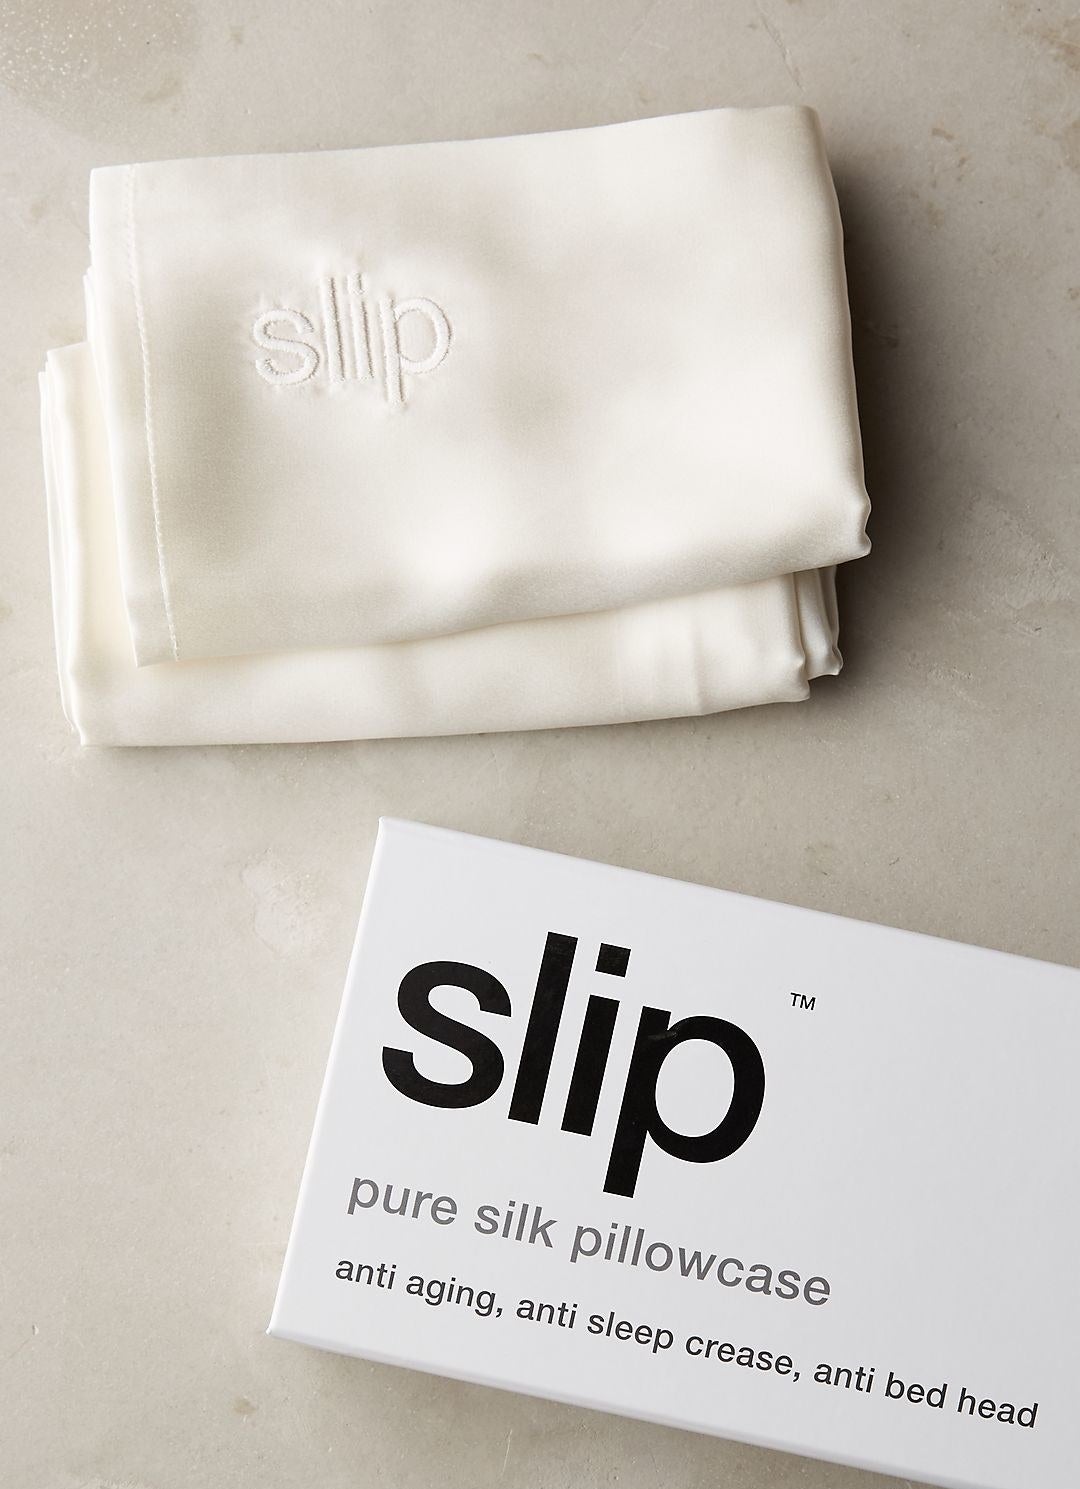 white slip silk pillowcase next to its box